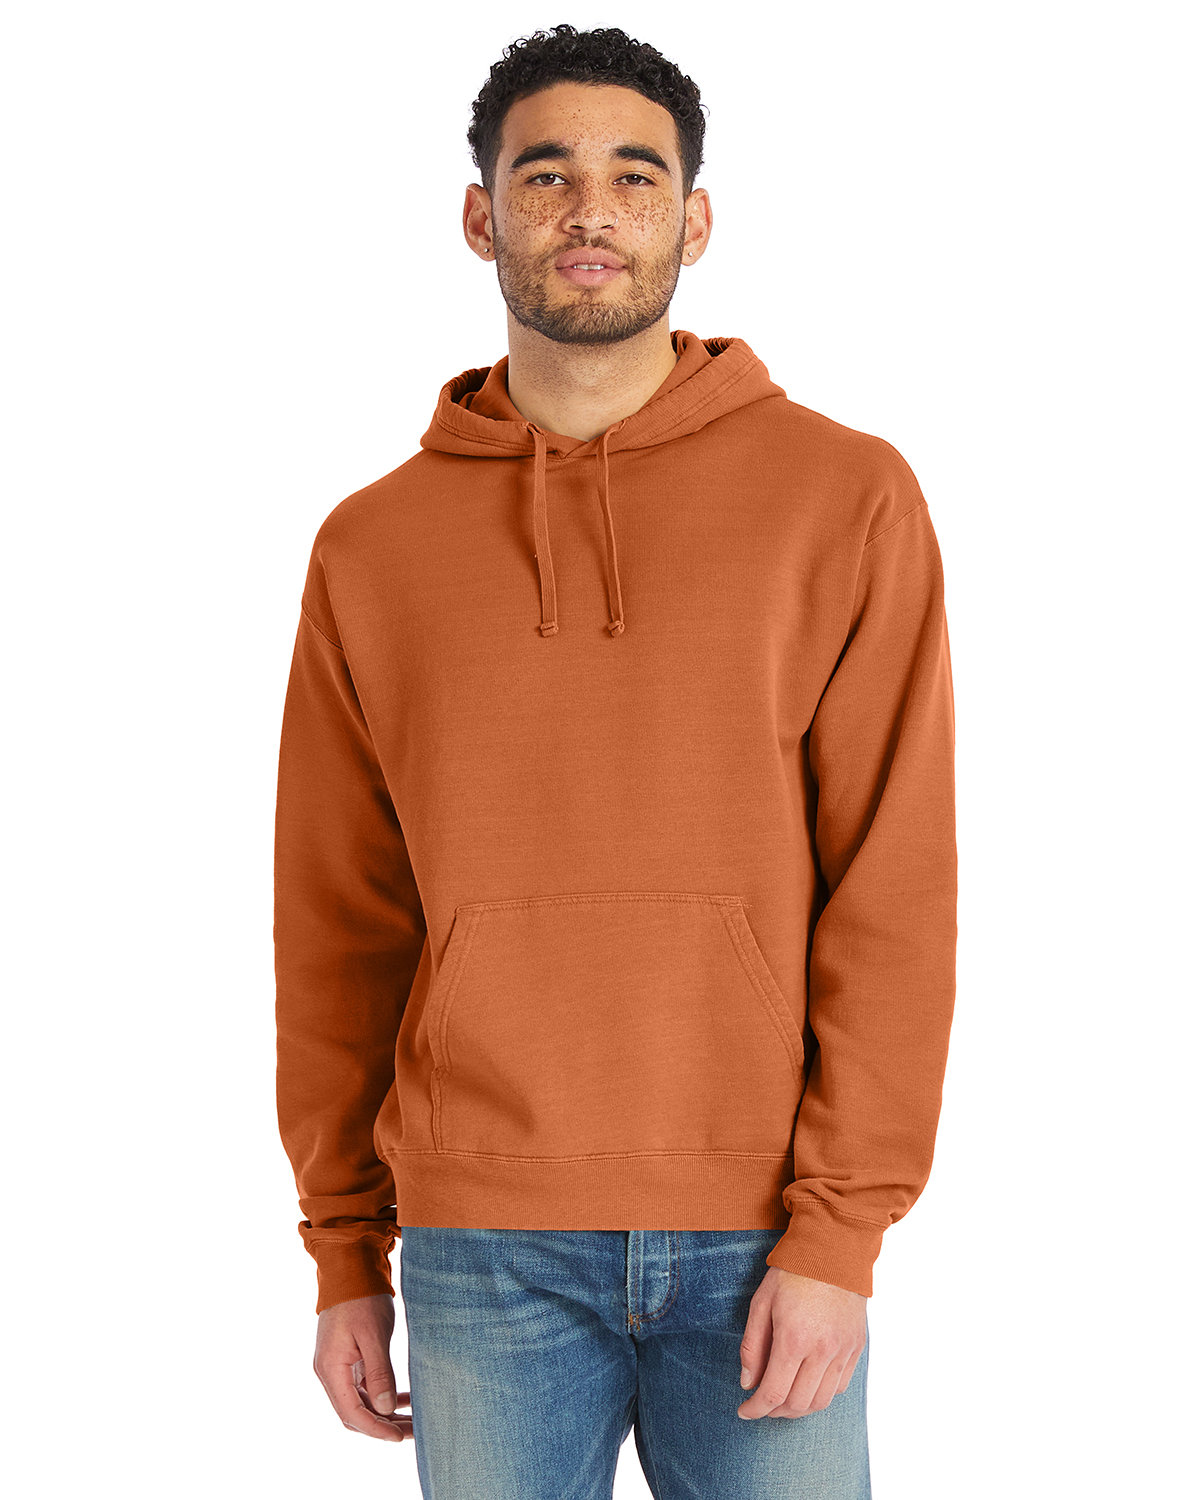 ComfortWash by Hanes Unisex Pullover Hooded Sweatshirt TEXAS ORANGE 